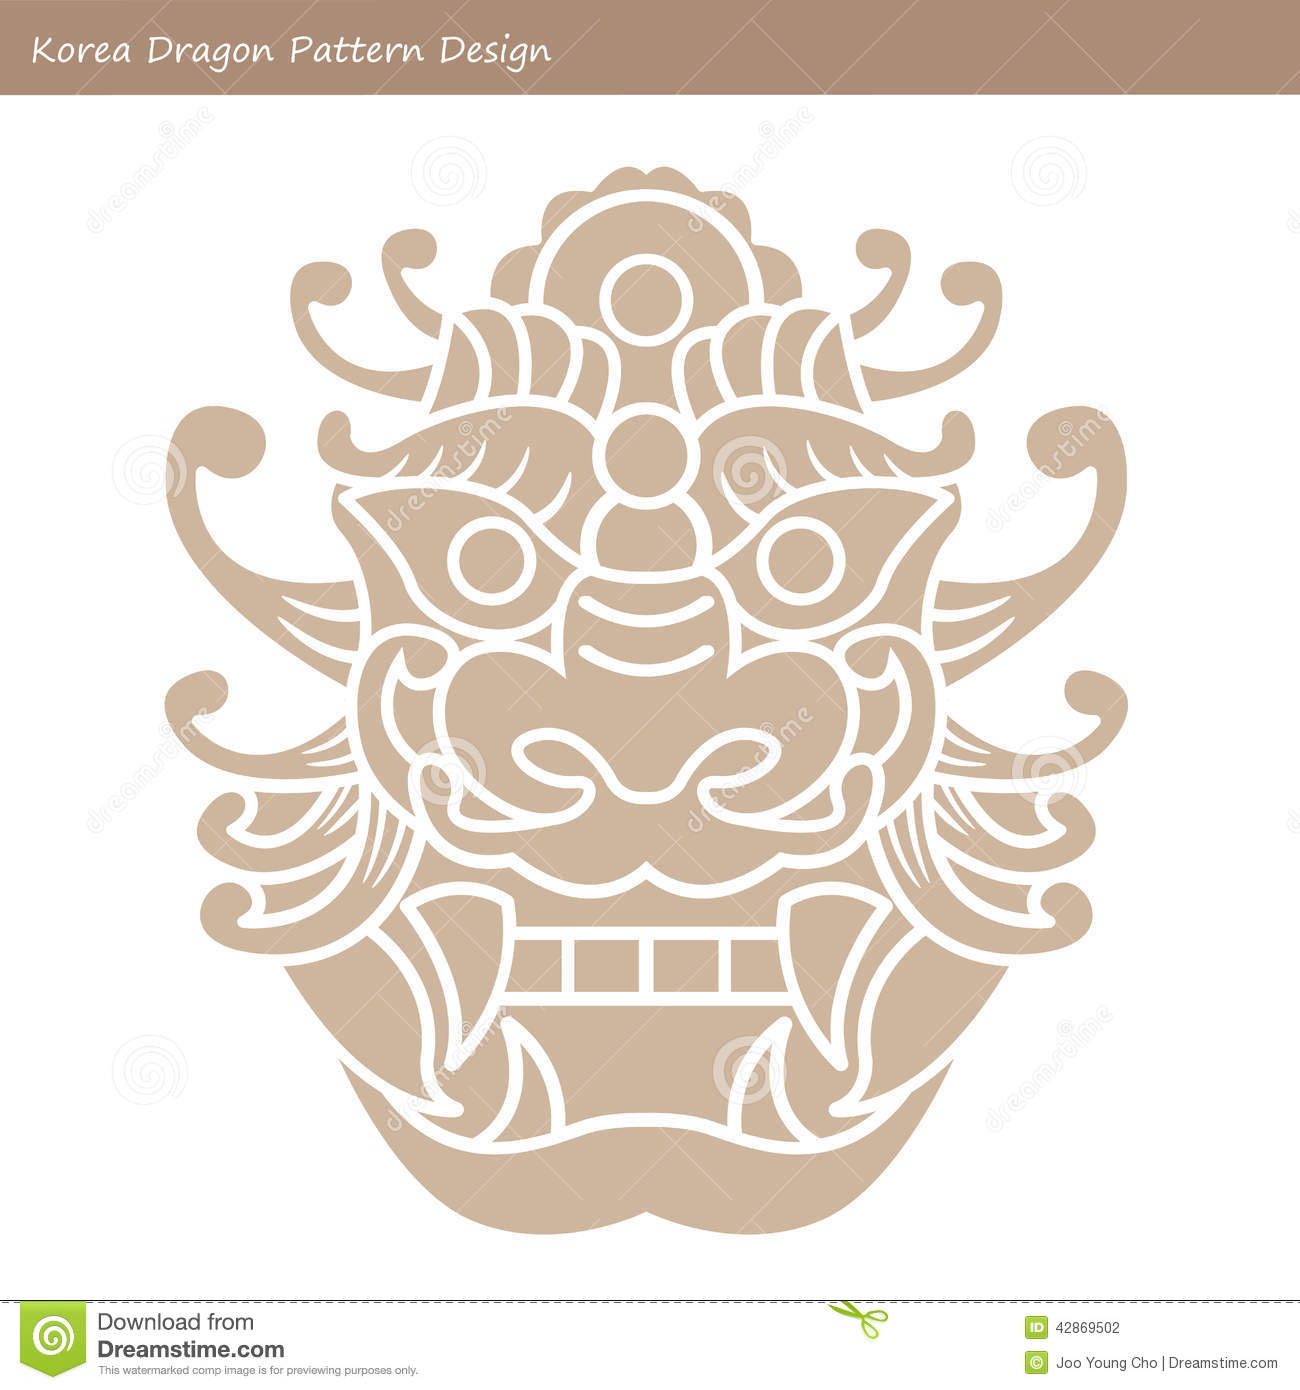 Korea Dragon Pattern Design  Korean Traditional Pattern Design S Stock